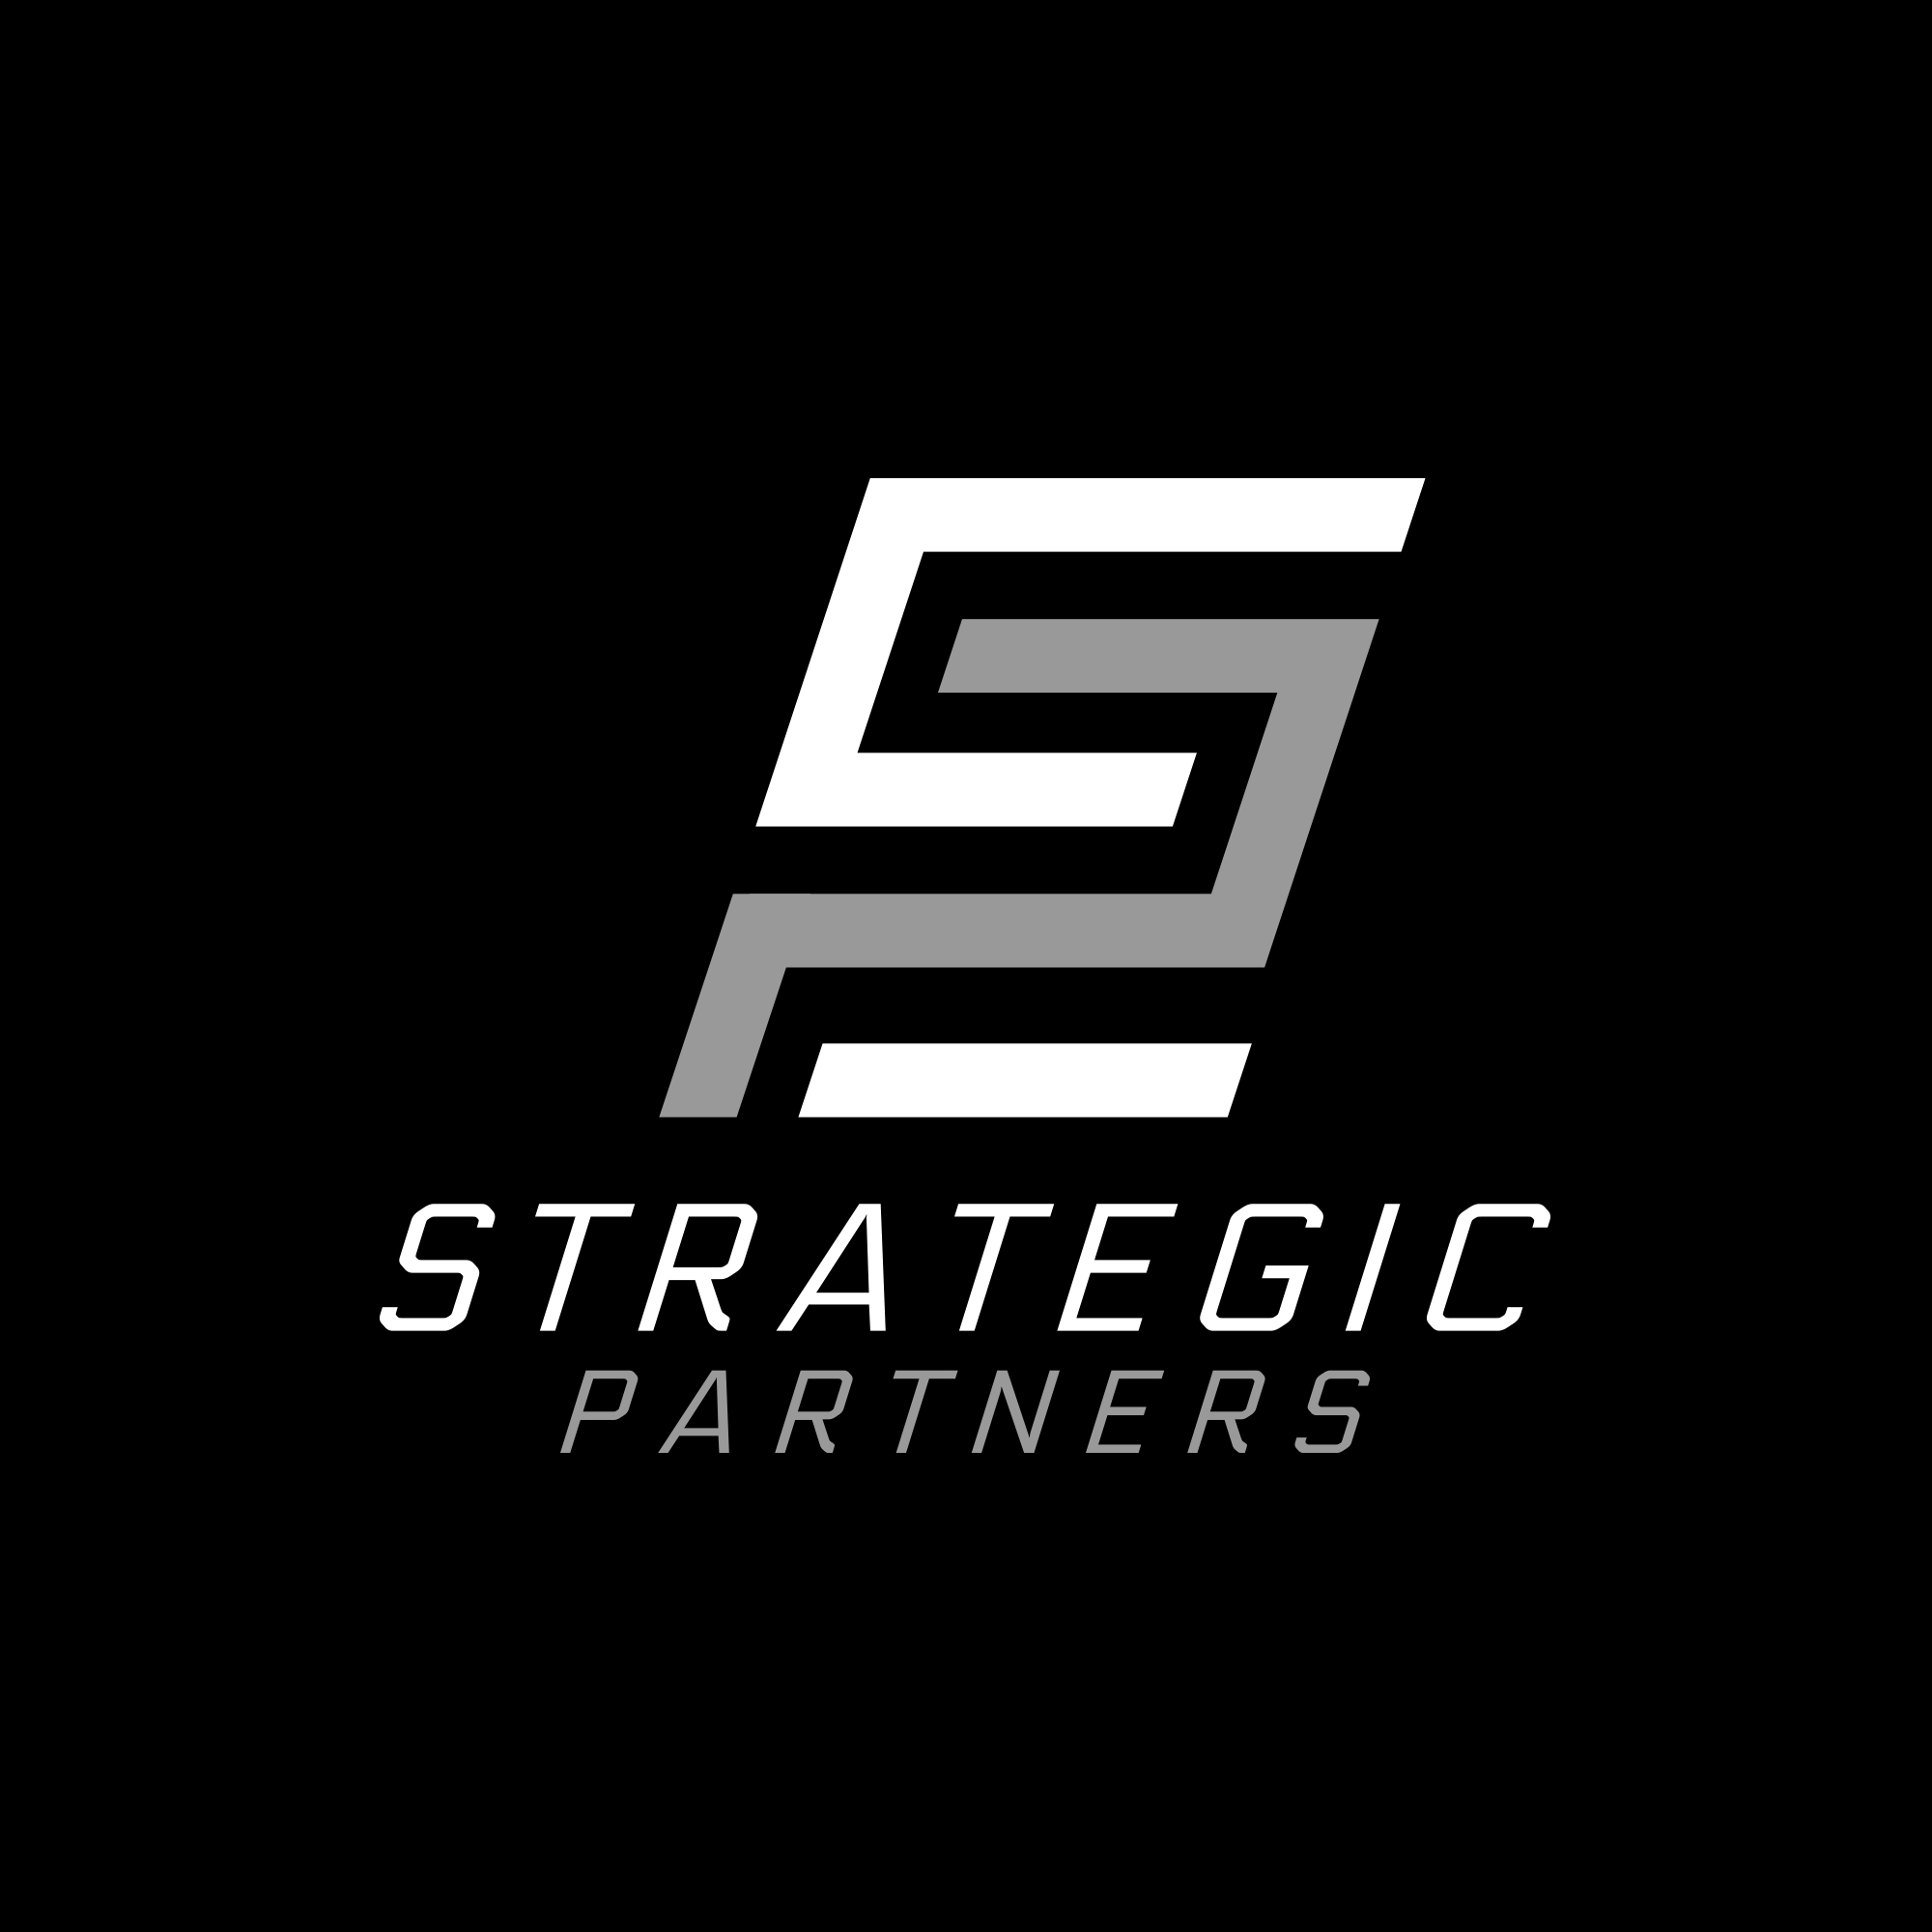   strategic_partners_logo_(9).jpg